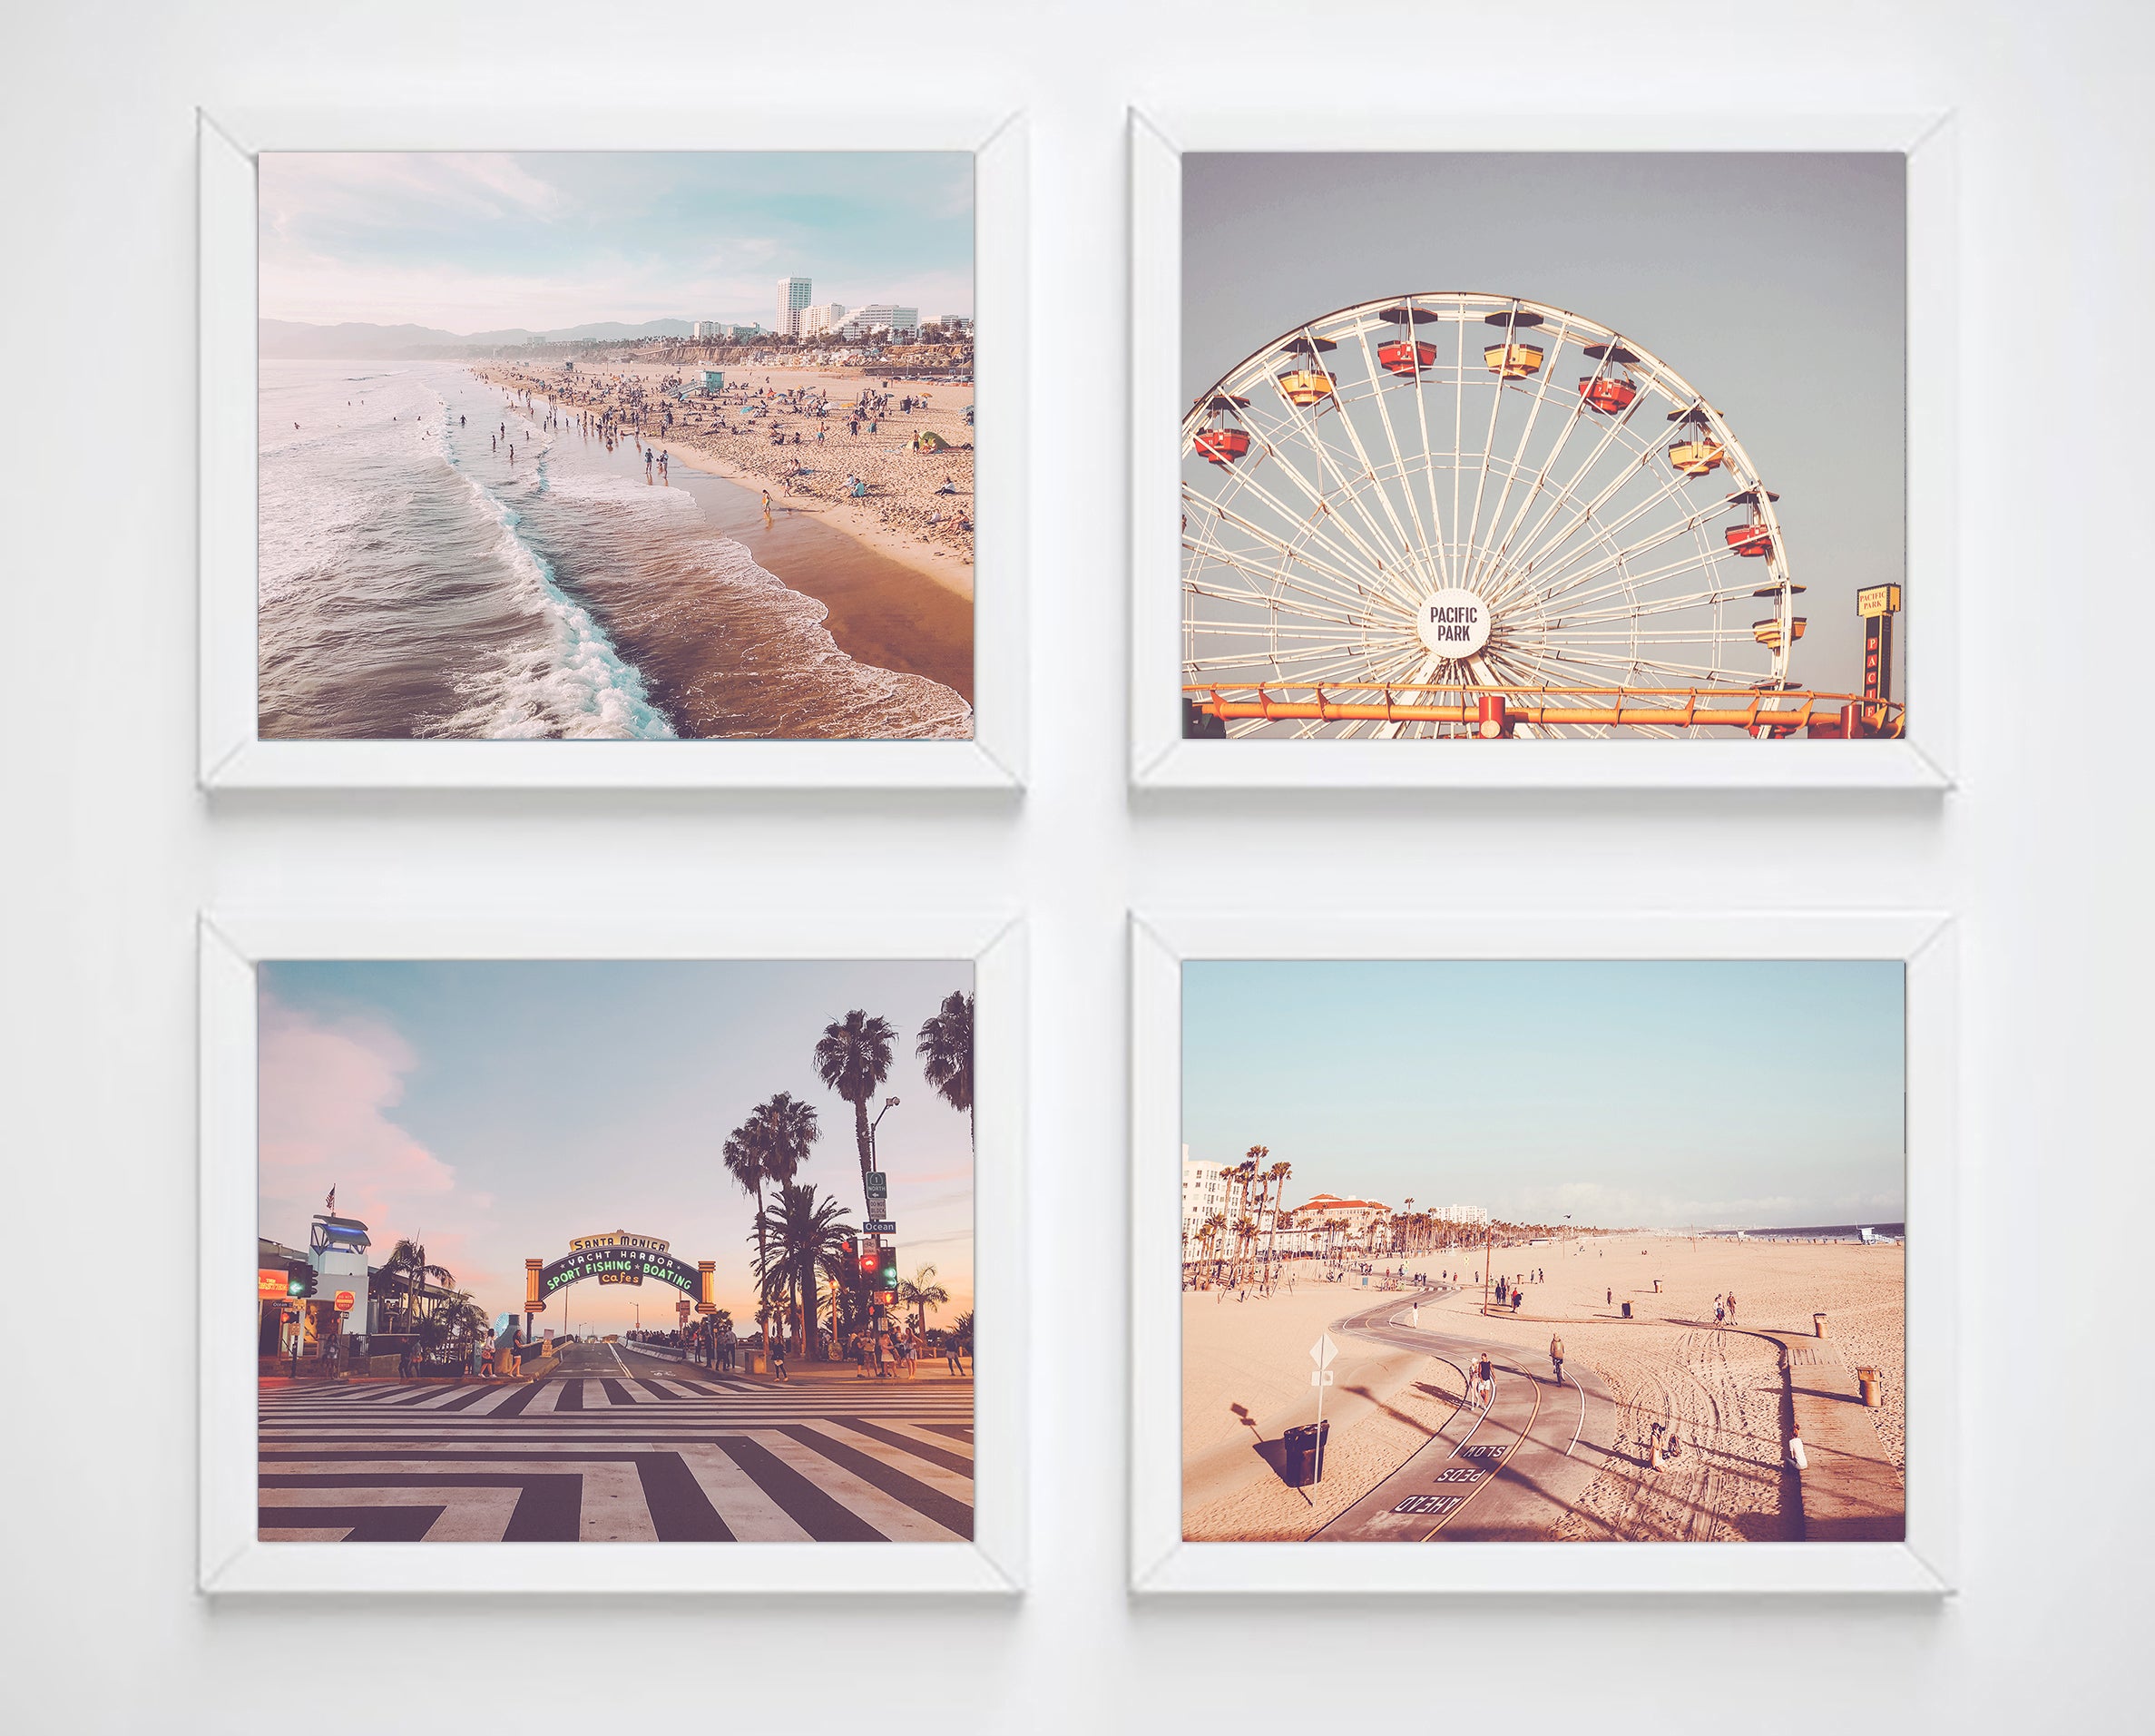 Santa Monica  Venice Beach Photography Prints, Set of 4, Coastal Wall Decor  Parody Art Prints Reviews on